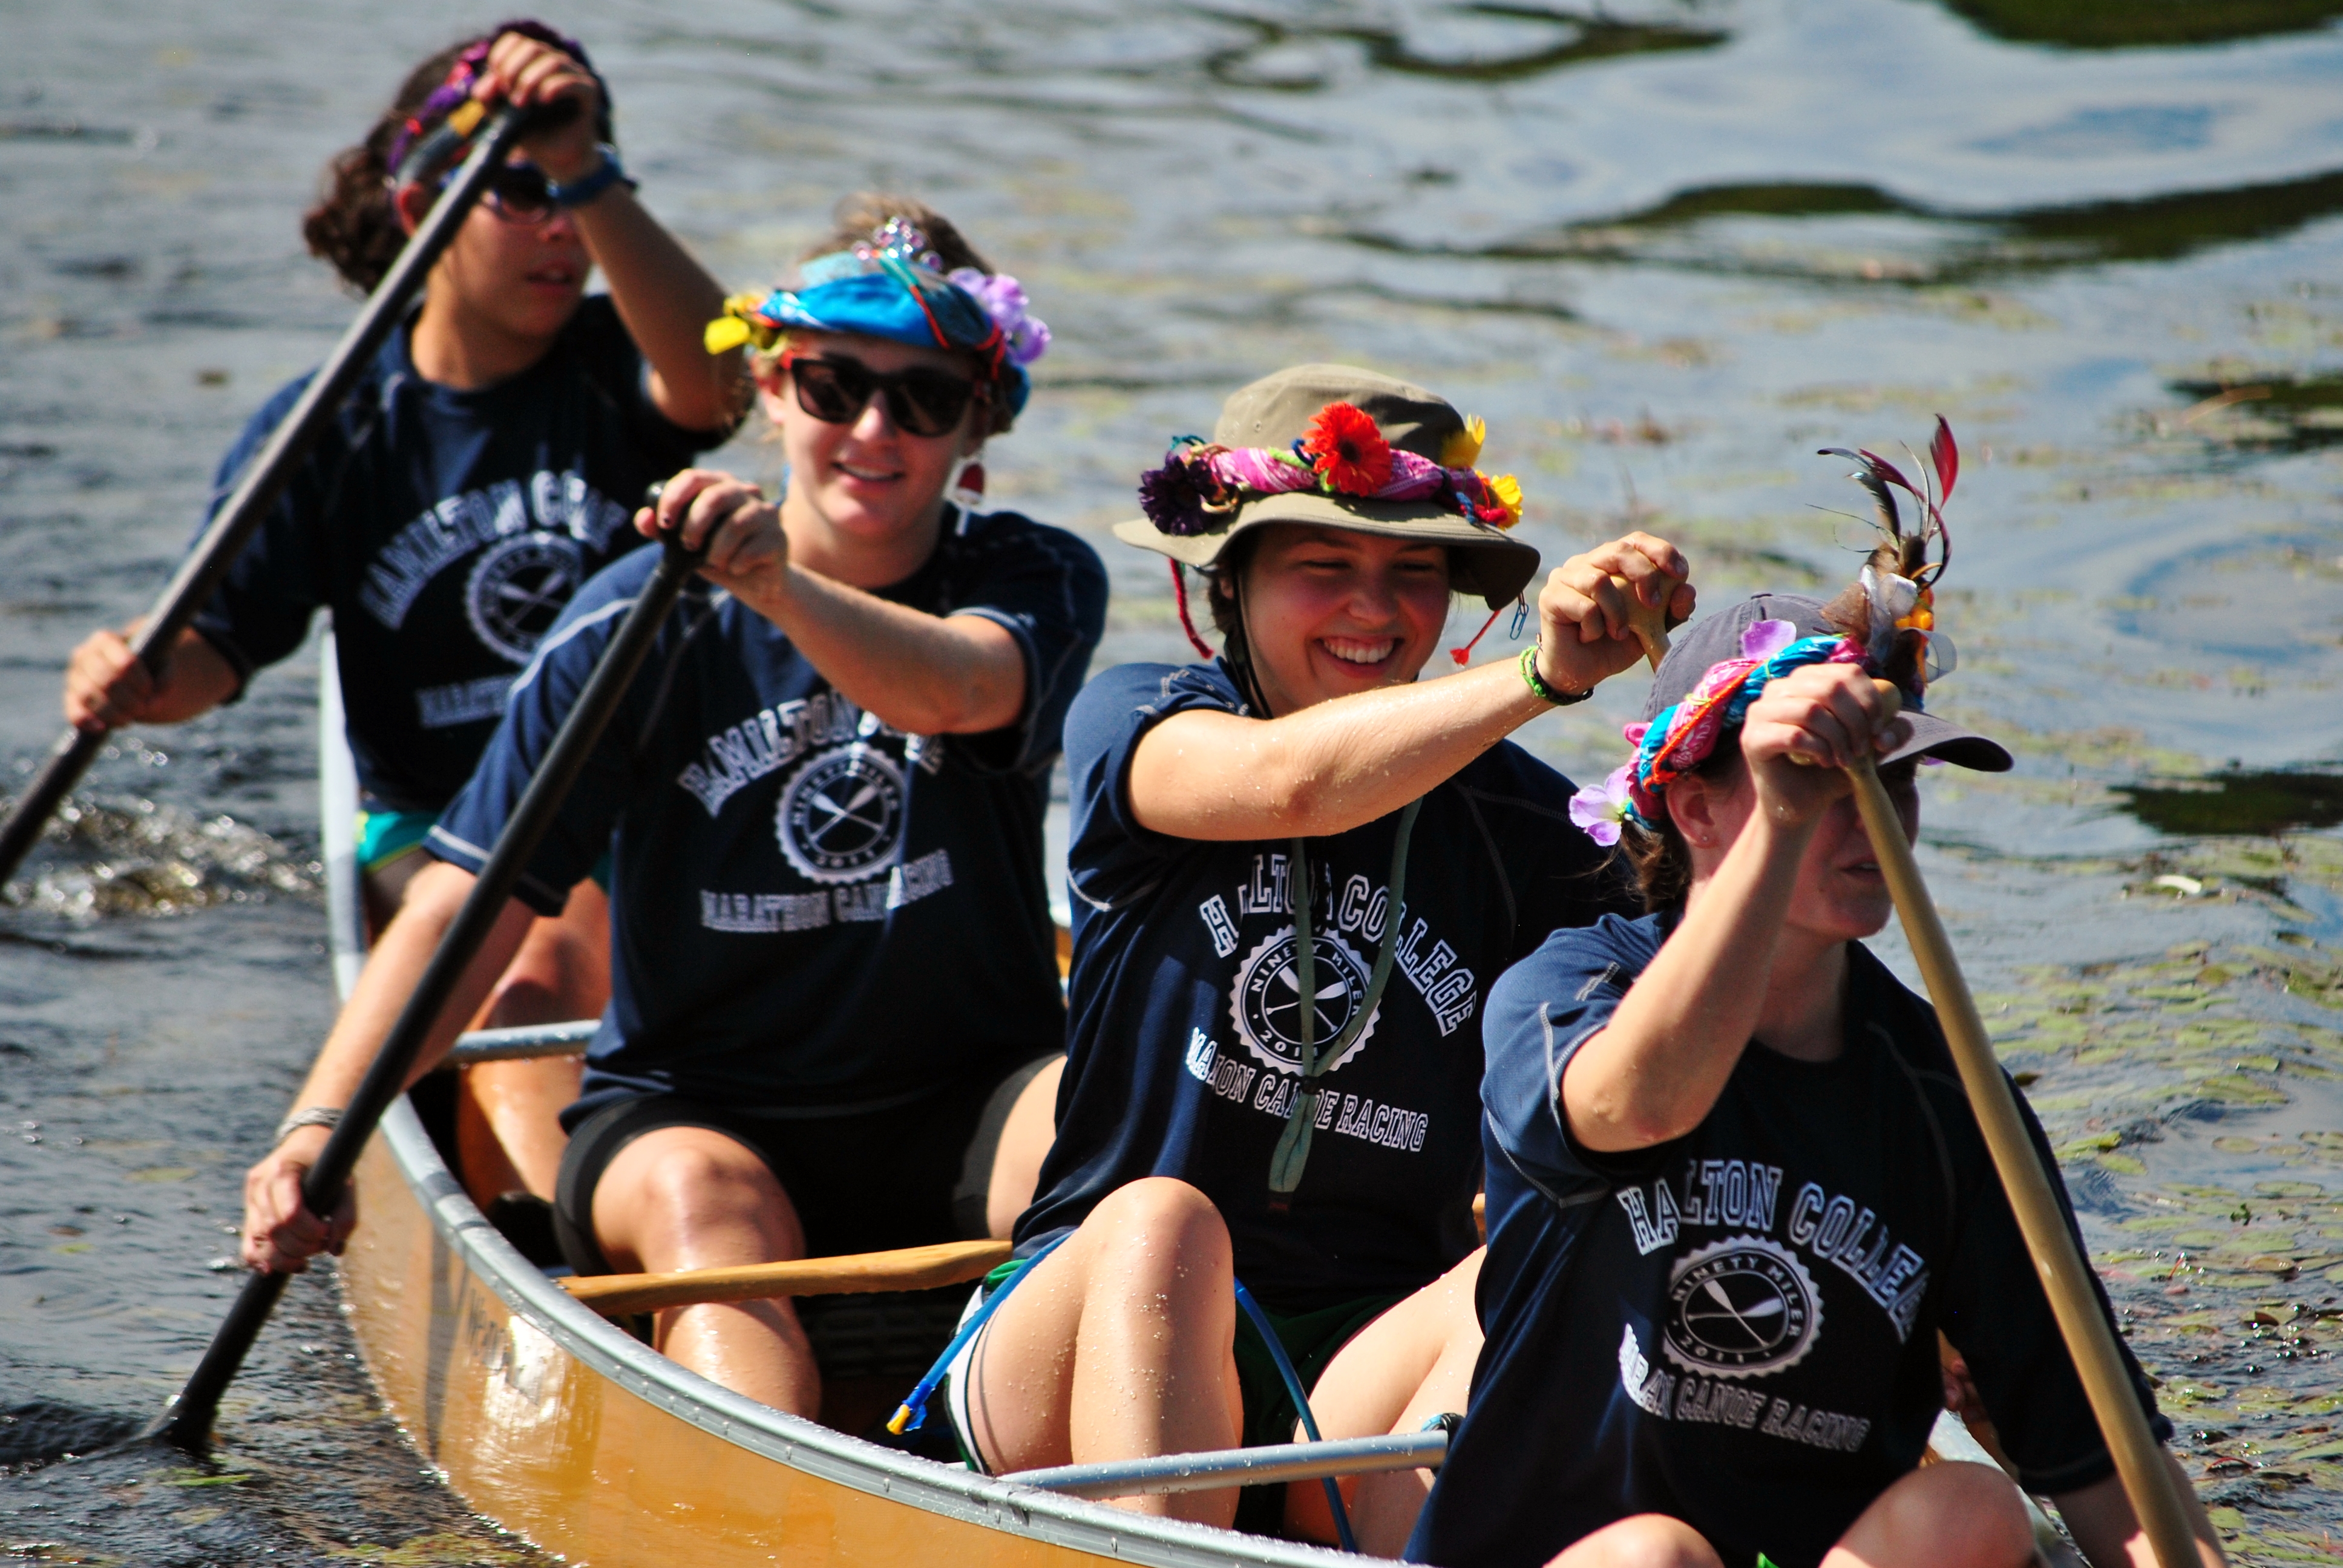 Adirondack Canoe Classic 2011 | Flickr - Photo Sharing!3872 x 2592